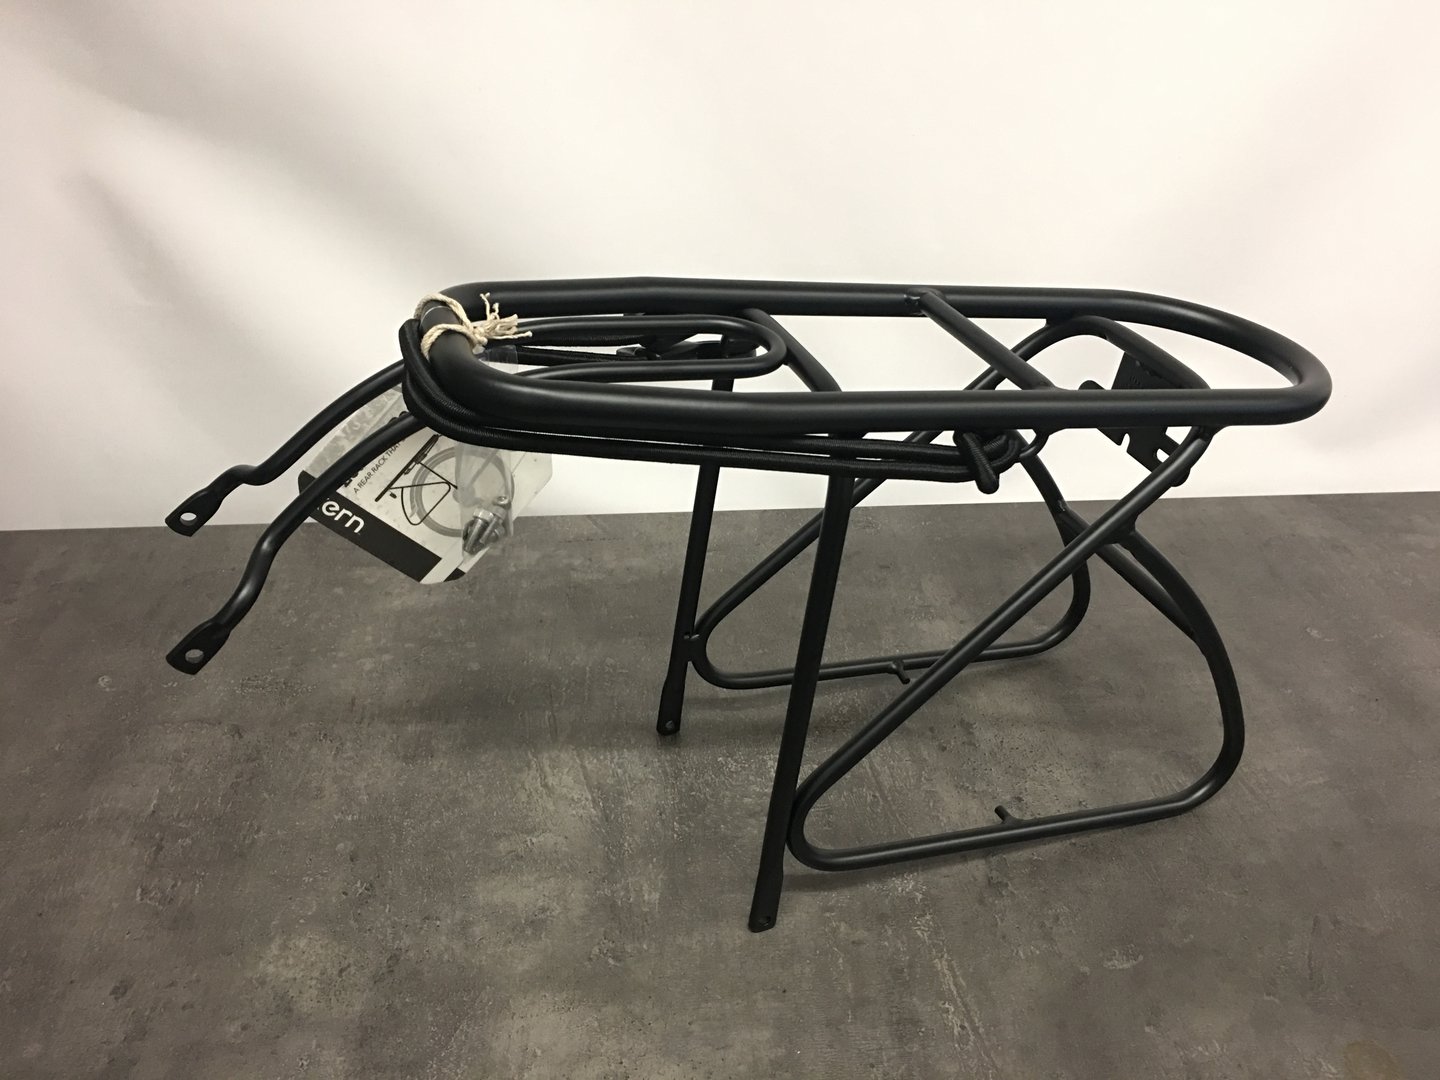 Tern Gepäckträger Loader Rack 20 Tragfähigkeit 25kg schwarz Fahrrad